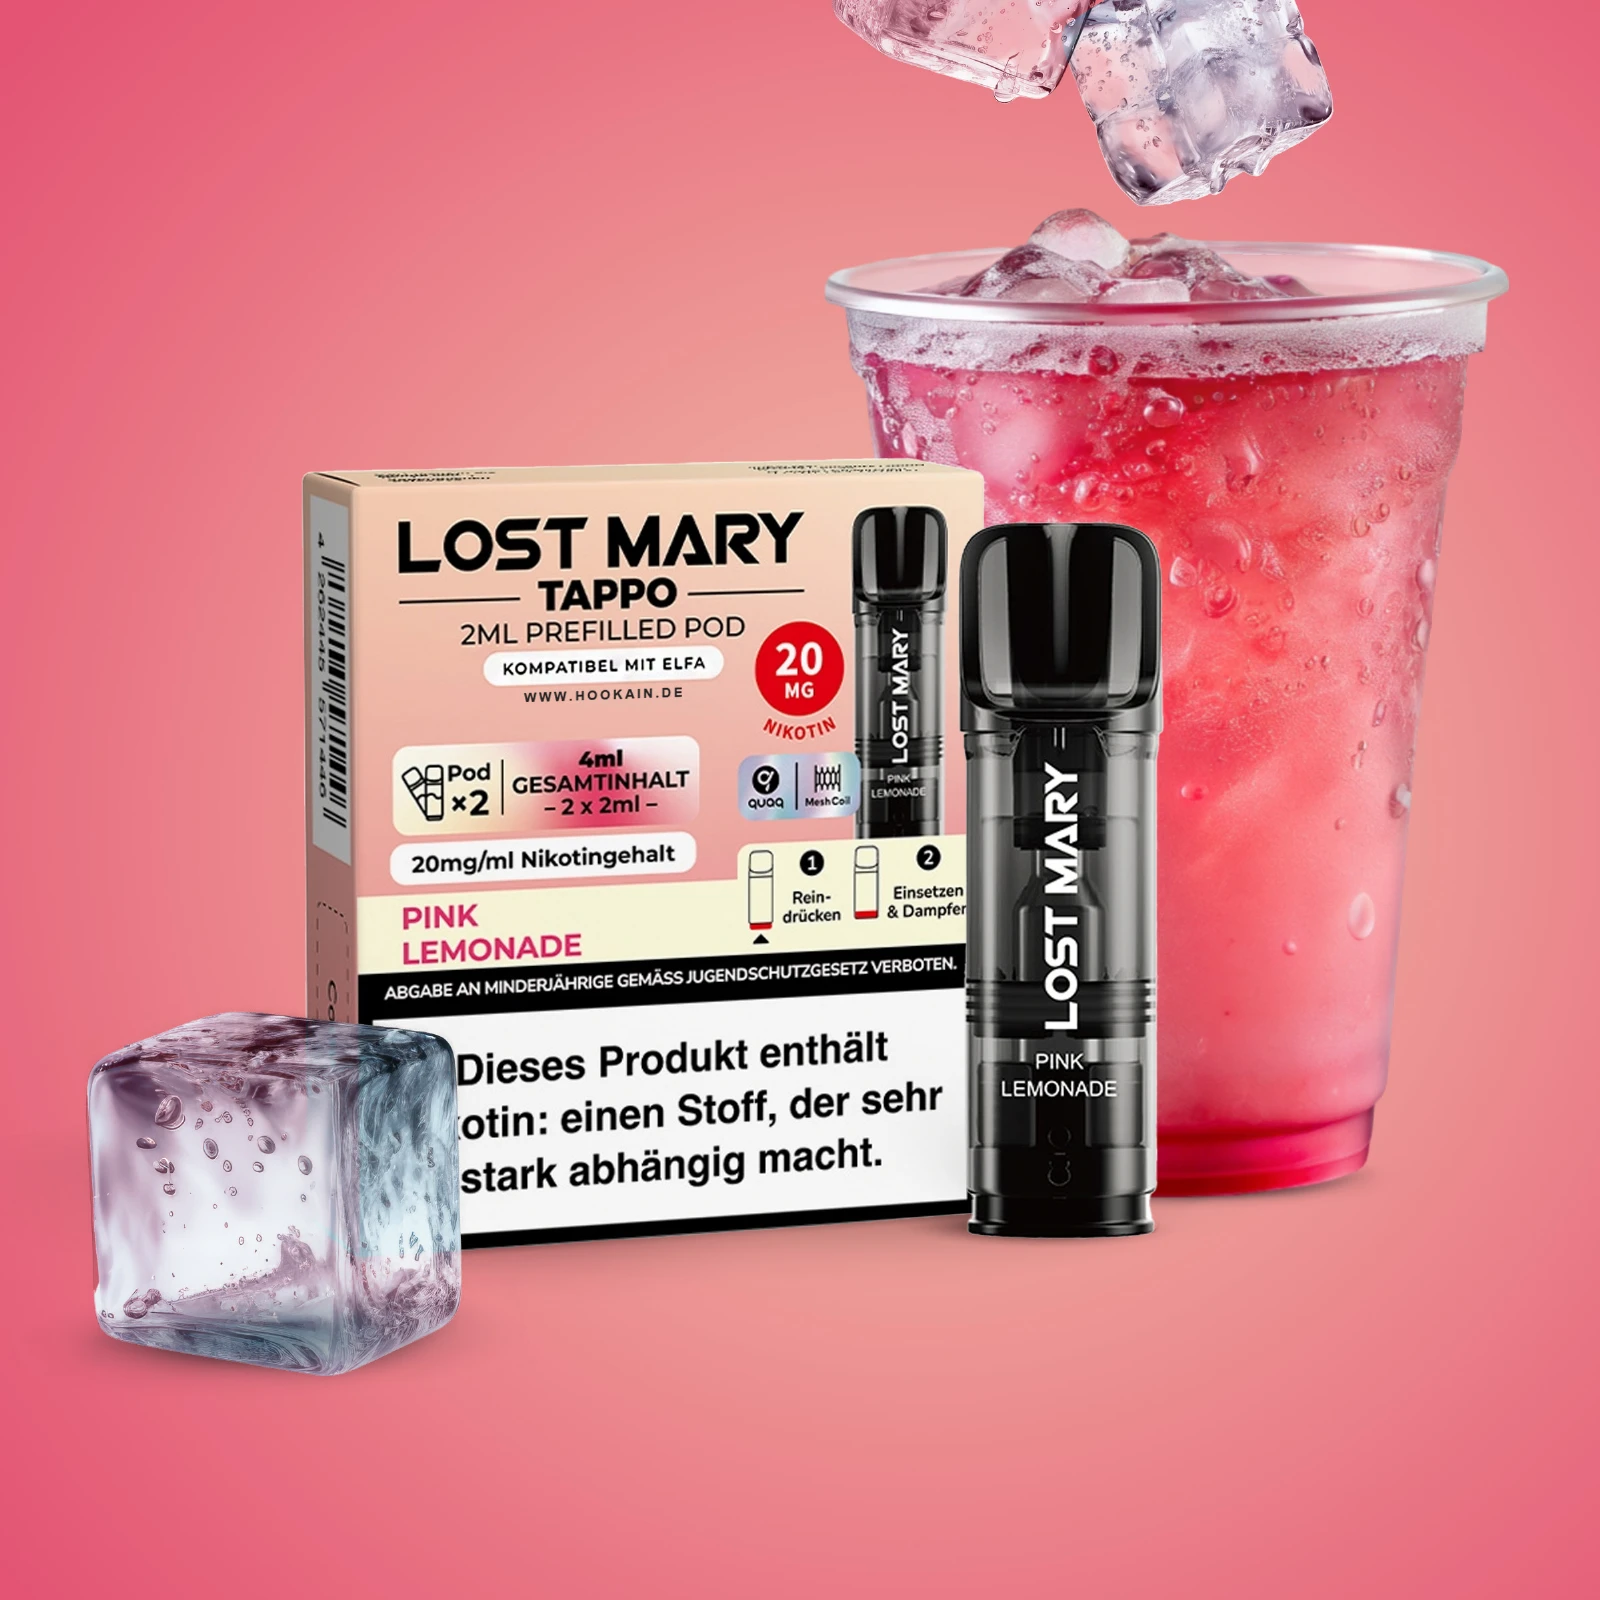 Lost Mary Tappo Pink Lemonade: Umweltfreundliches Pod-System mit Prefilled Pods